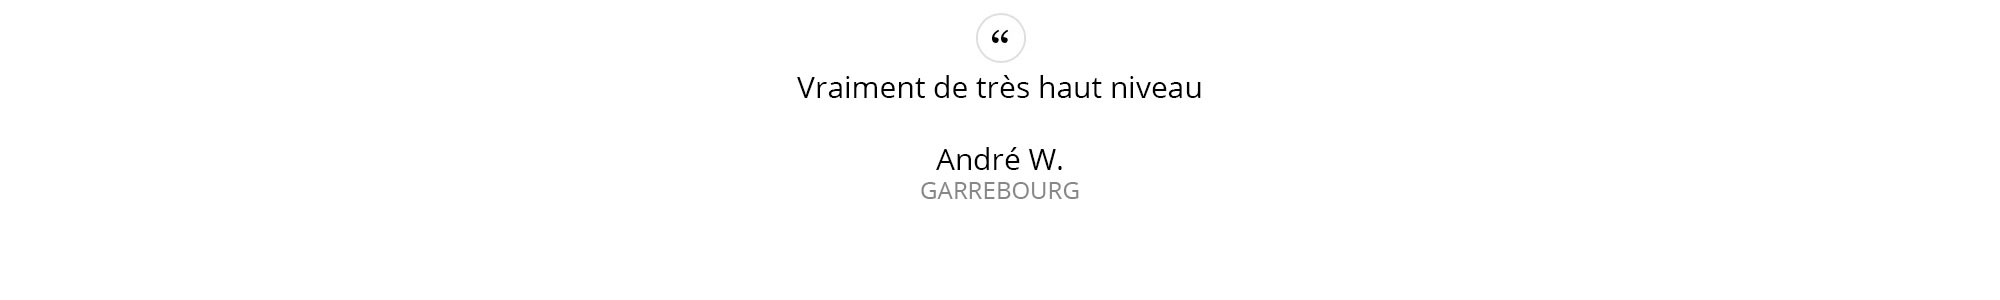 André-W.---GARREBOURG